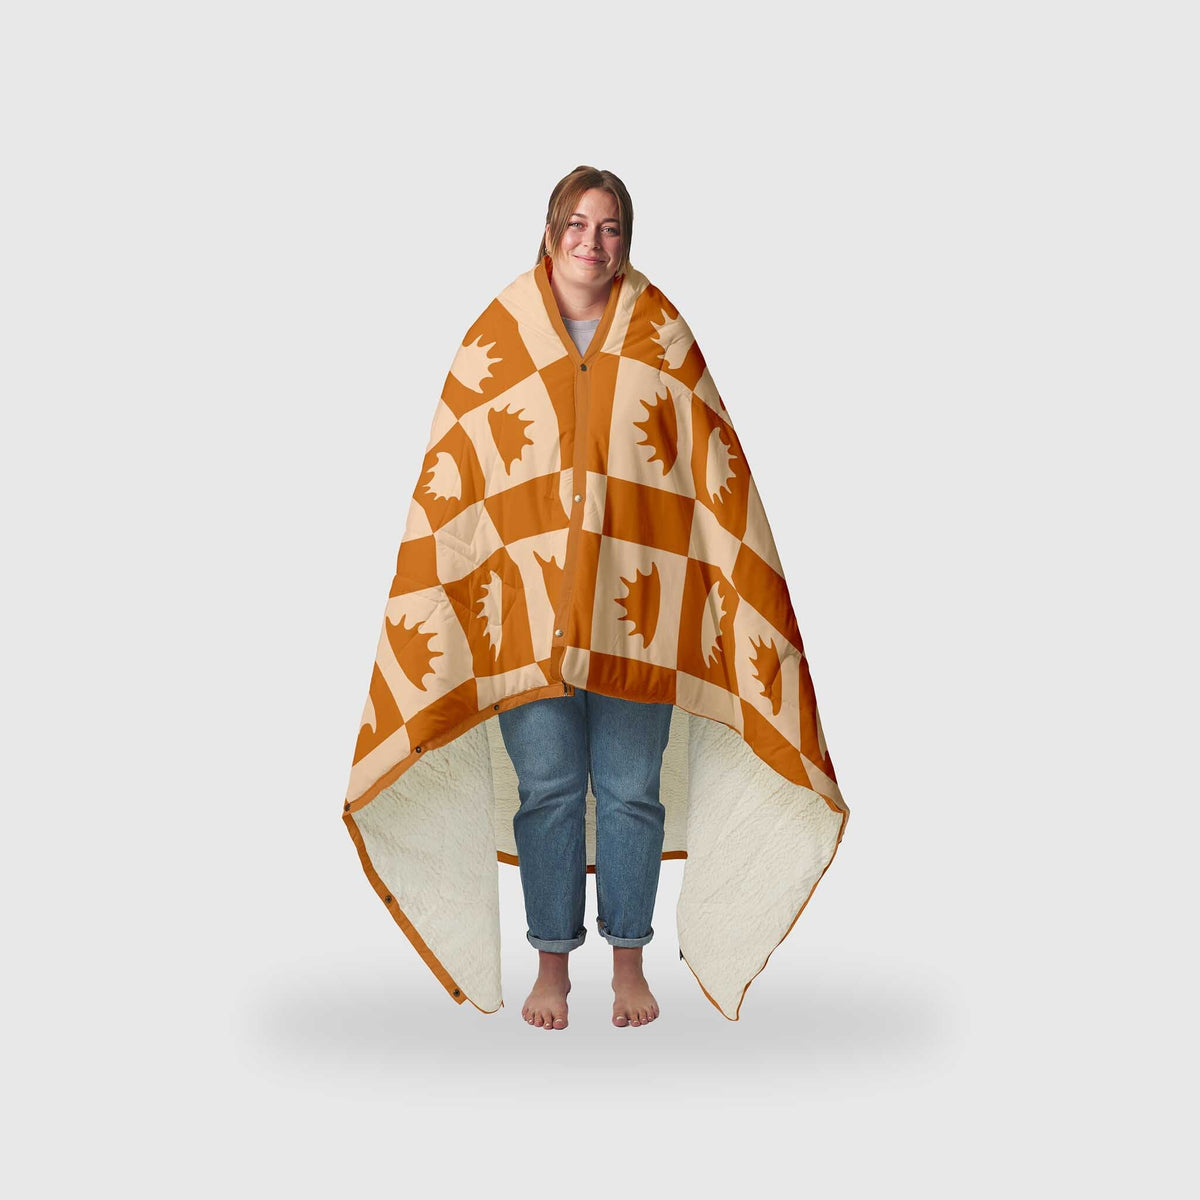 VOITED CloudTouch® Indoor/Outdoor Camping Blanket - Concha